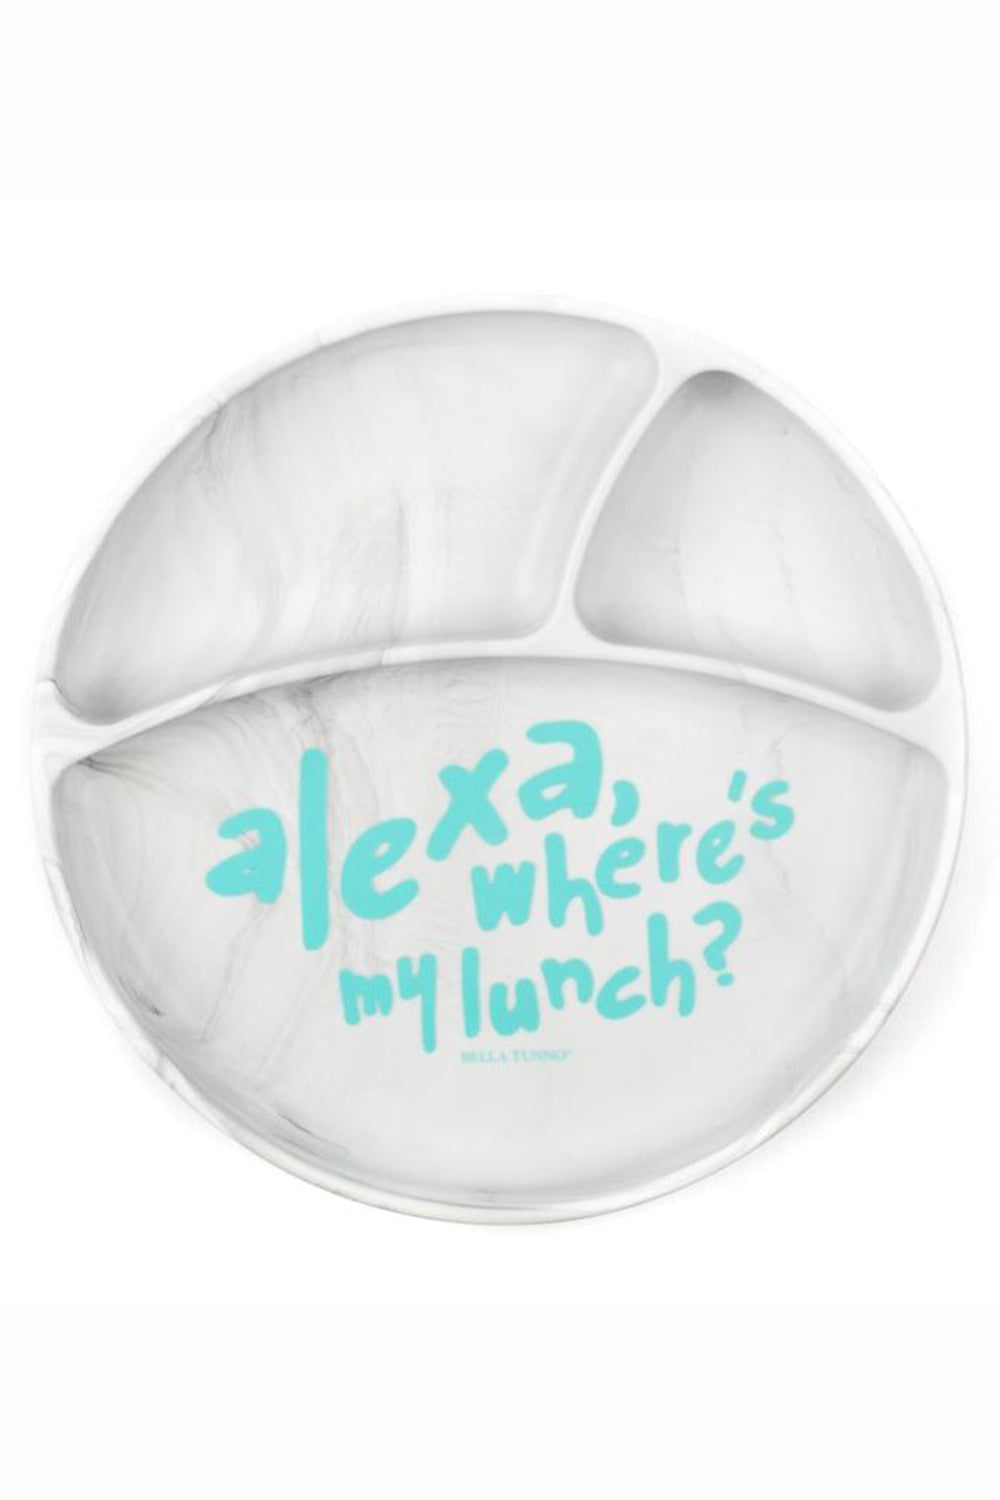 Wonder Plate - Alexa